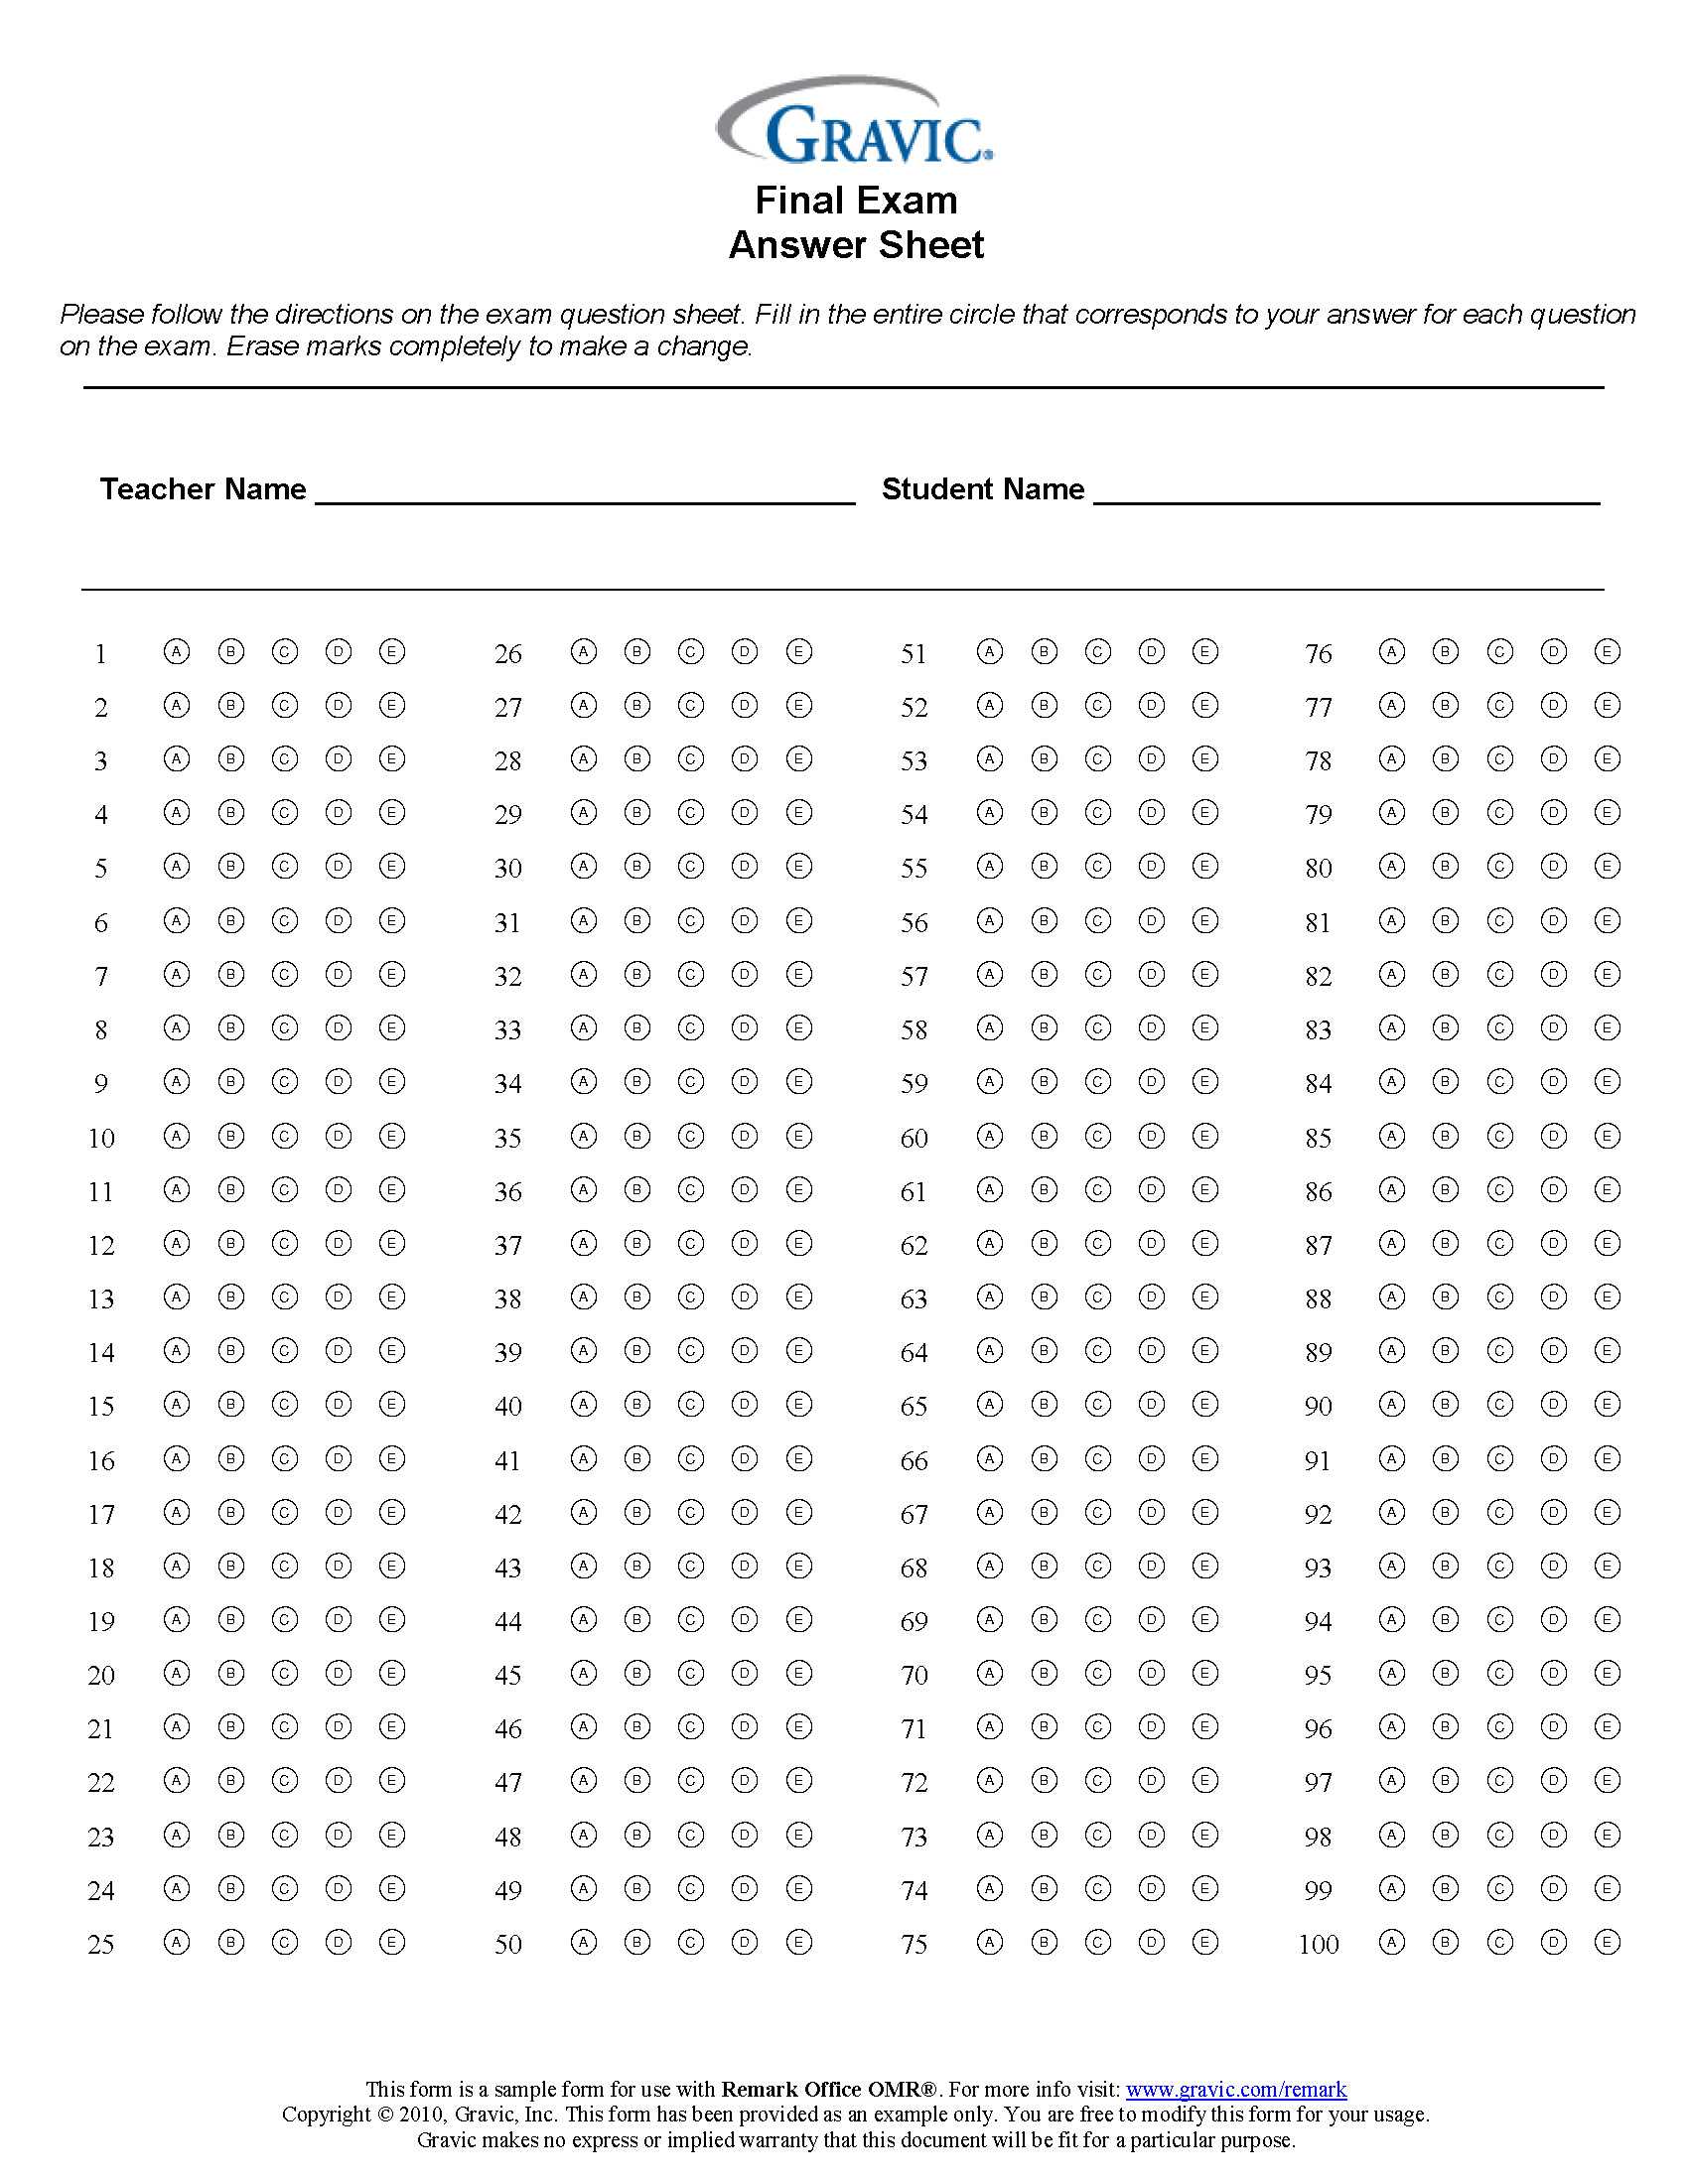 Final Exam 100 Question Test Answer Sheet · Remark Software Throughout Blank Answer Sheet Template 1 100